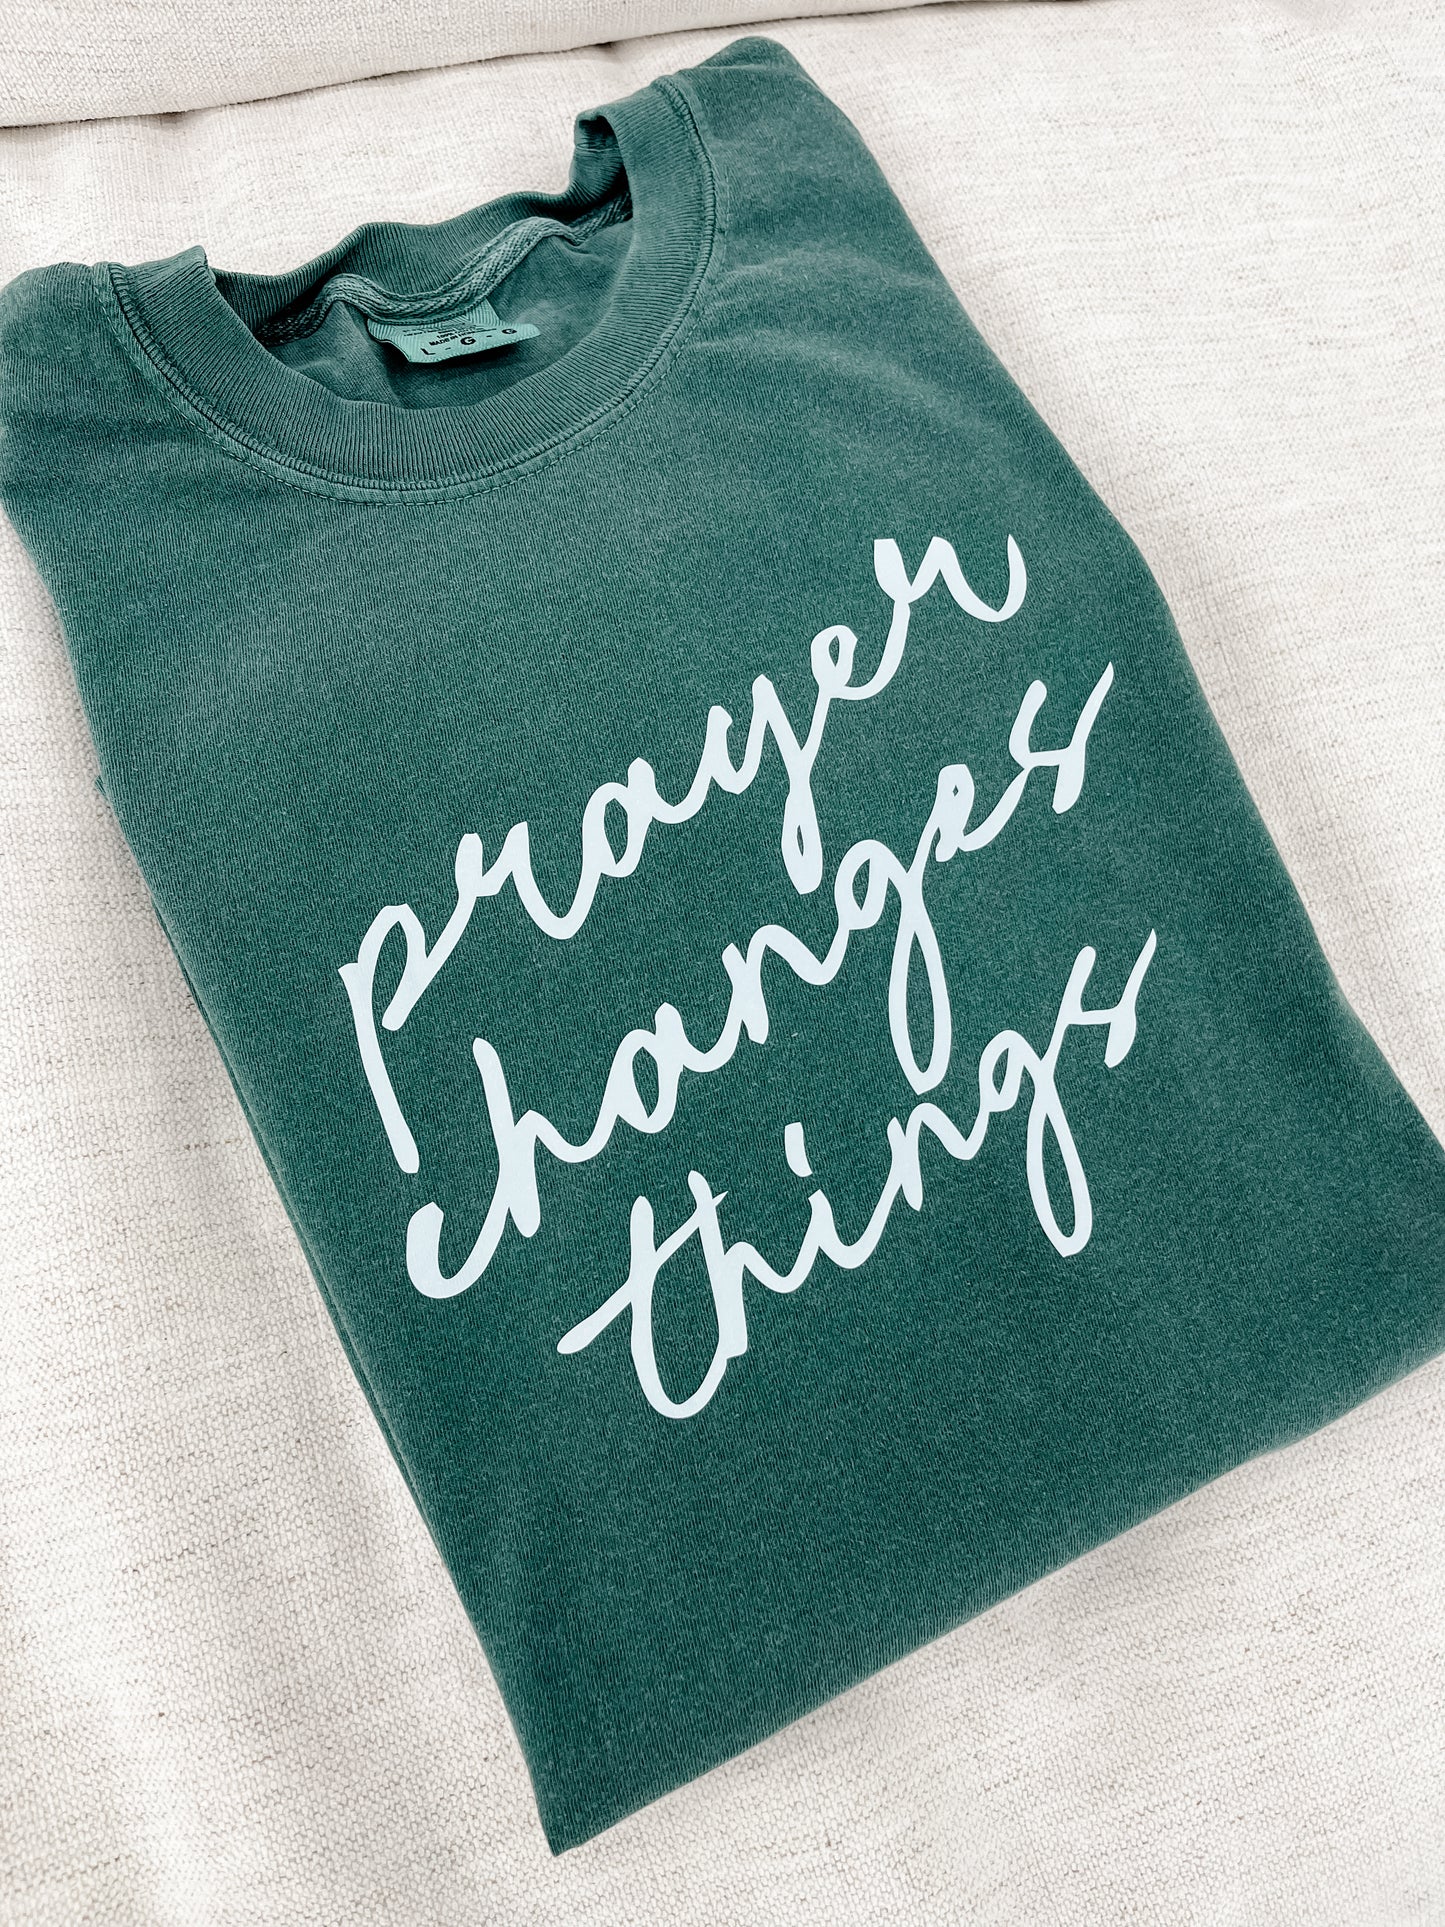 Prayer Changes Things Tee